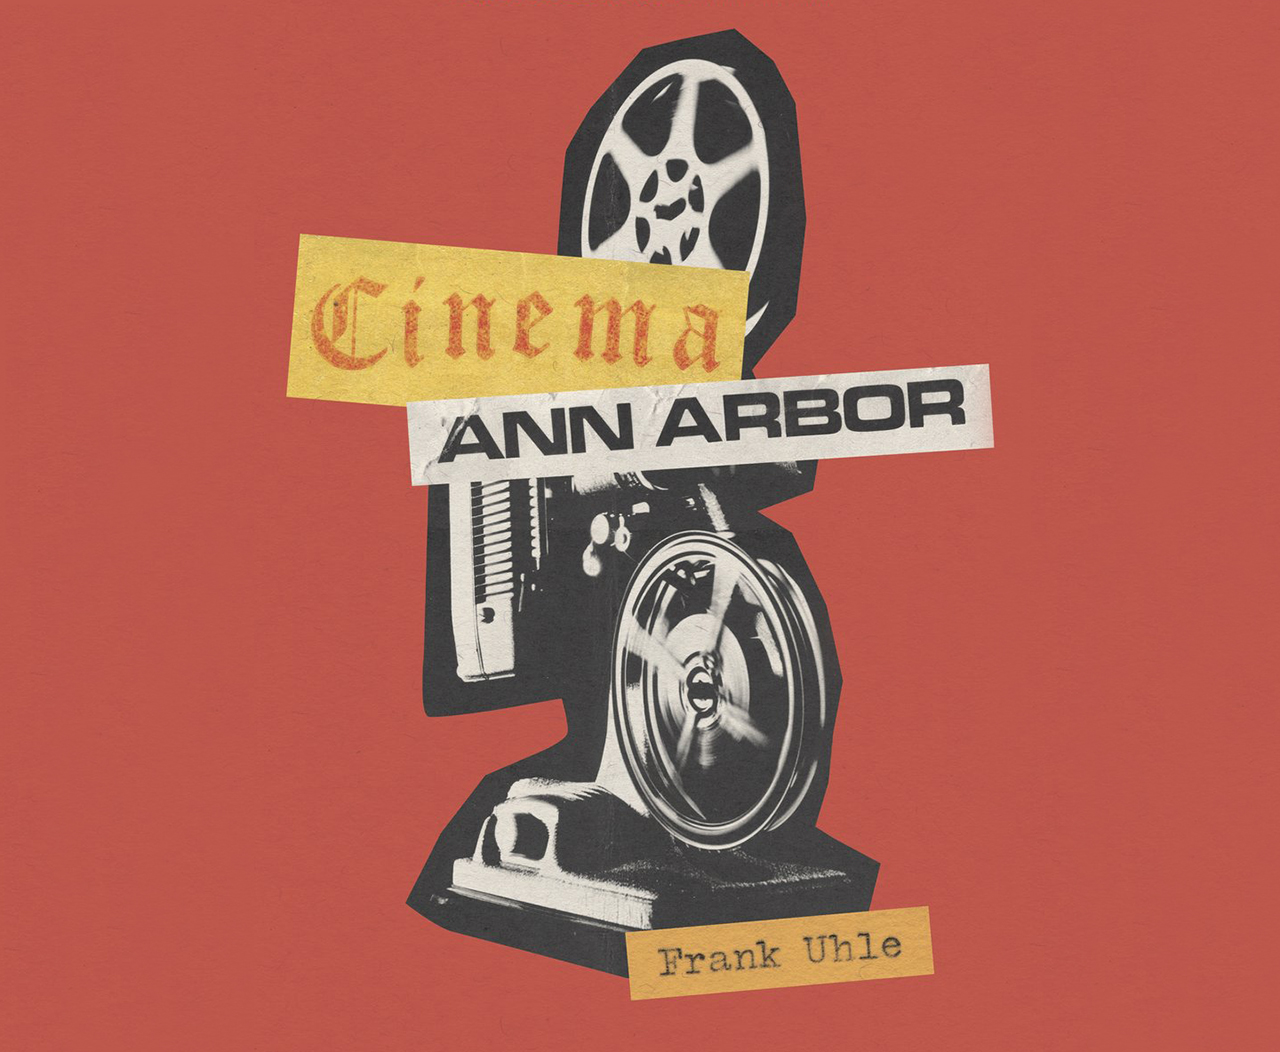 Cinema Ann Arbor by Frank Uhle